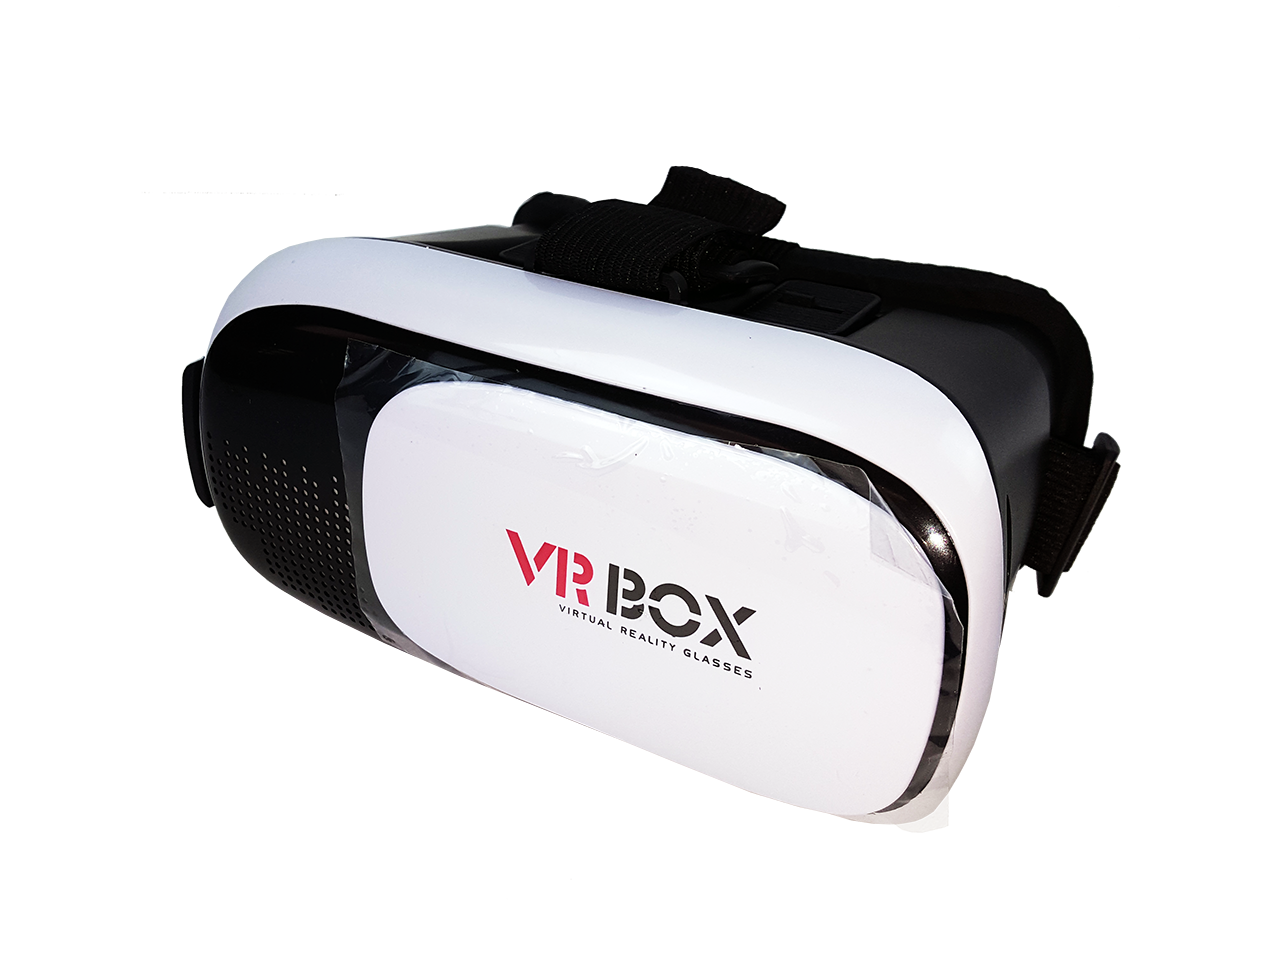 3D Virtual Reality VR Box 2.0 Glasses Smart Phone Universal VR Headset Goggle Video